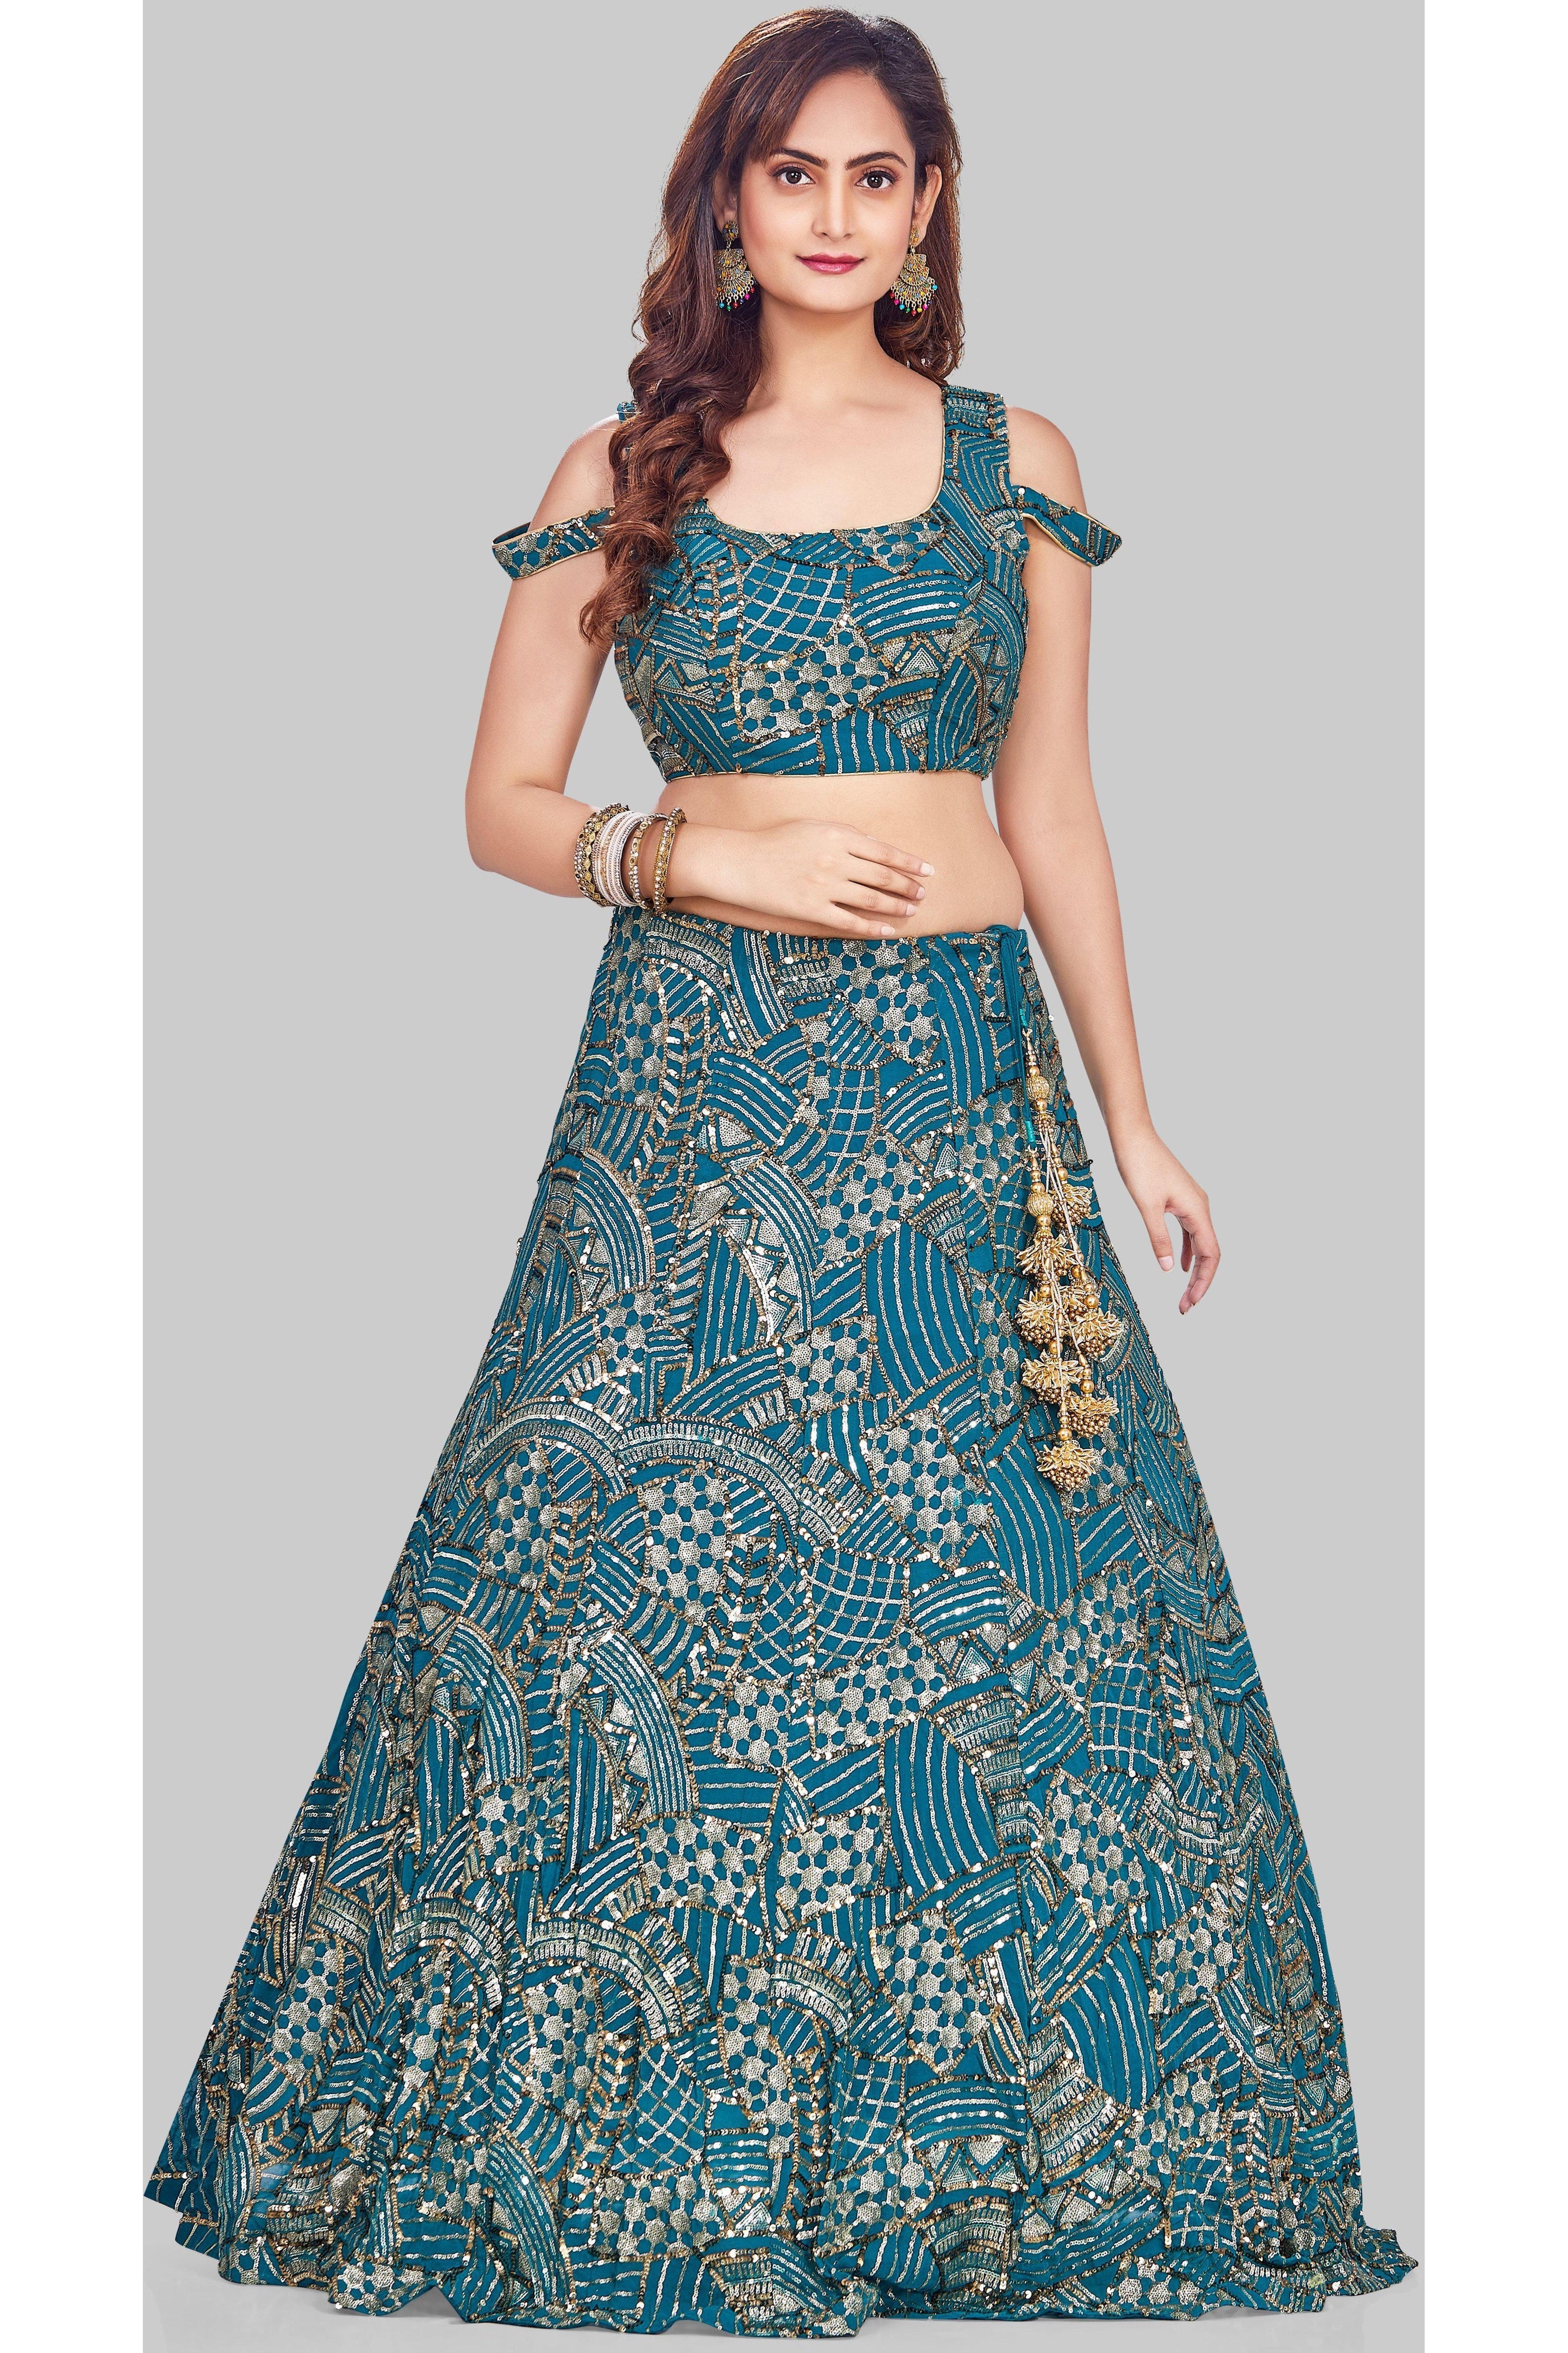 Fashion Ka Fatka India - Lavishing Light Pastel Peach Colour Bridal Wear Lehenga  Choli.Teamed Up With Designer Cold Shoulder Blouse and matching dupatta.  shop now : https://bit.ly/2VnnQKw whatsapp us on +917265866630 #ethnicwear #